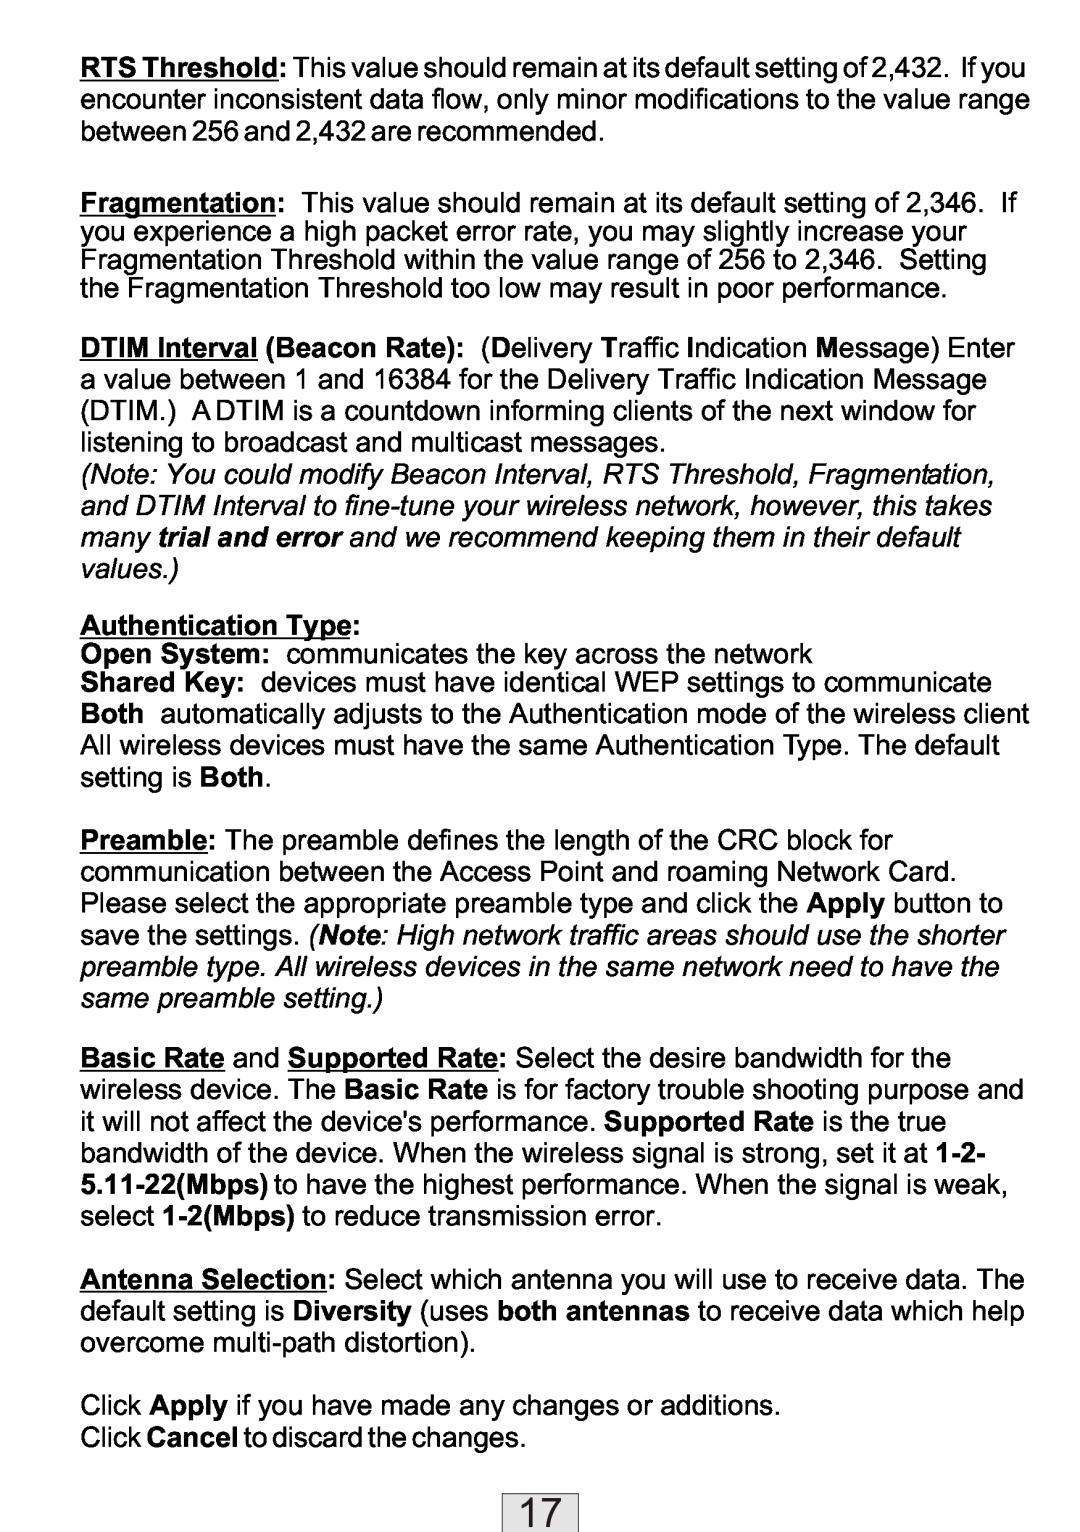 TRENDnet TEW-310APBX manual Authentication Type 